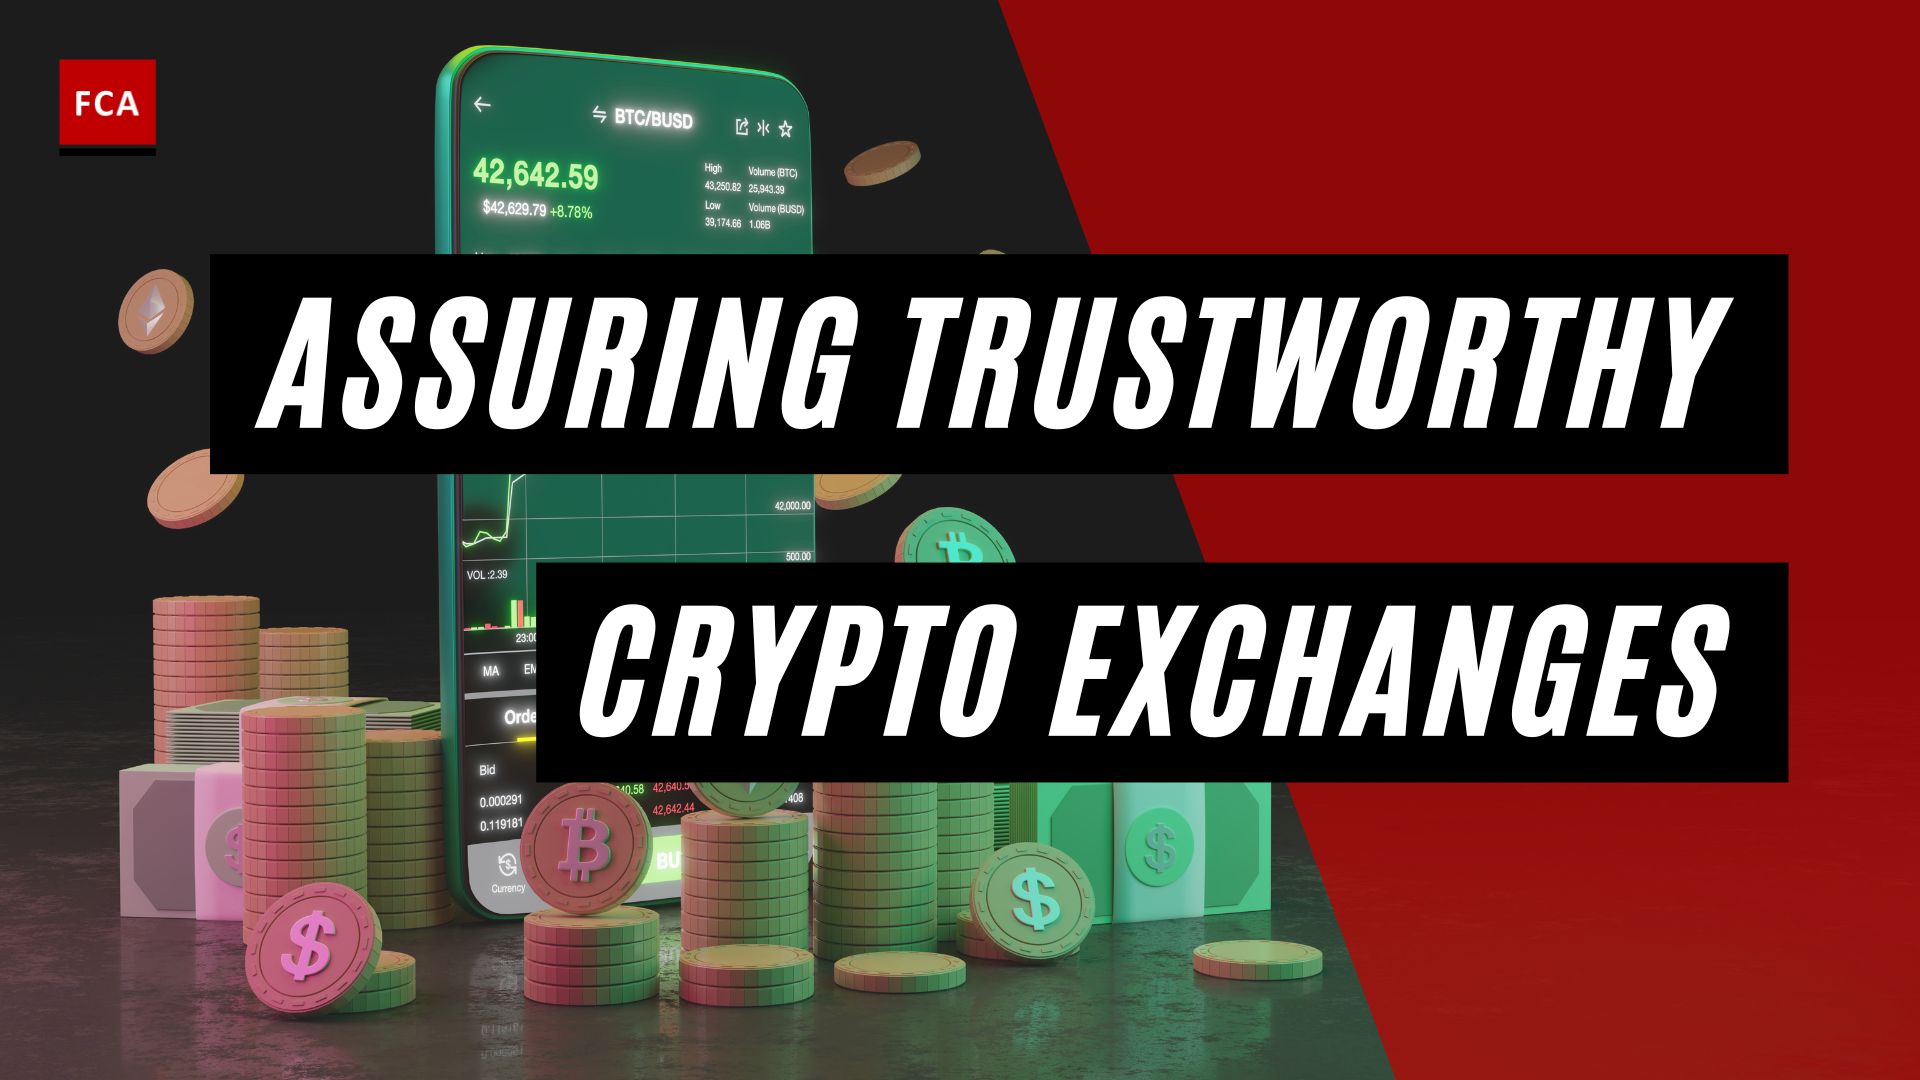 Assuring Trustworthy Crypto Exchanges